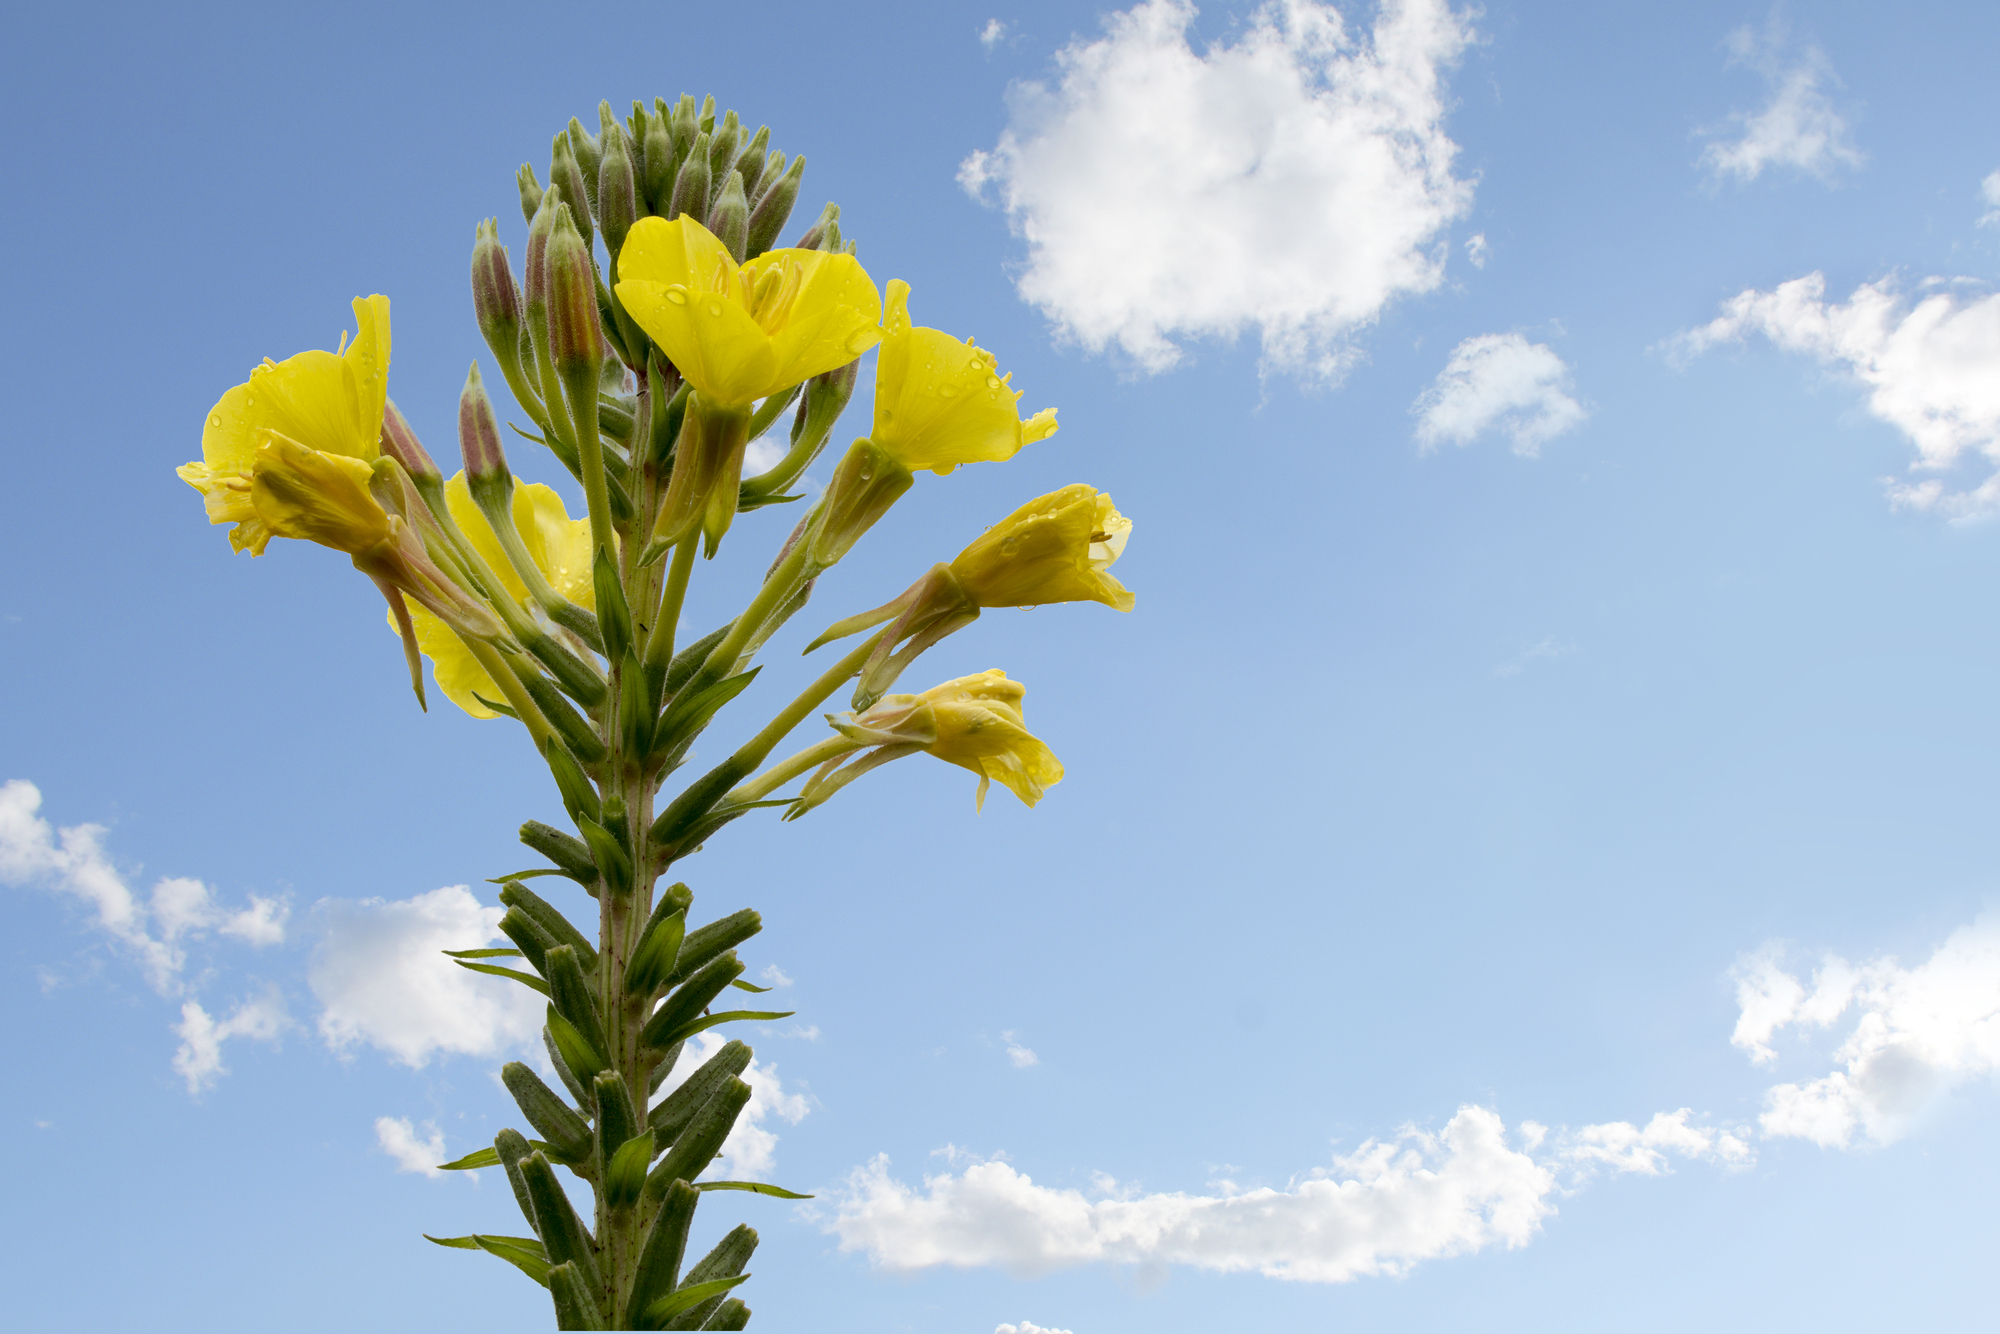 Yellow evening primrose (Oenothera biennis) against the blue sky